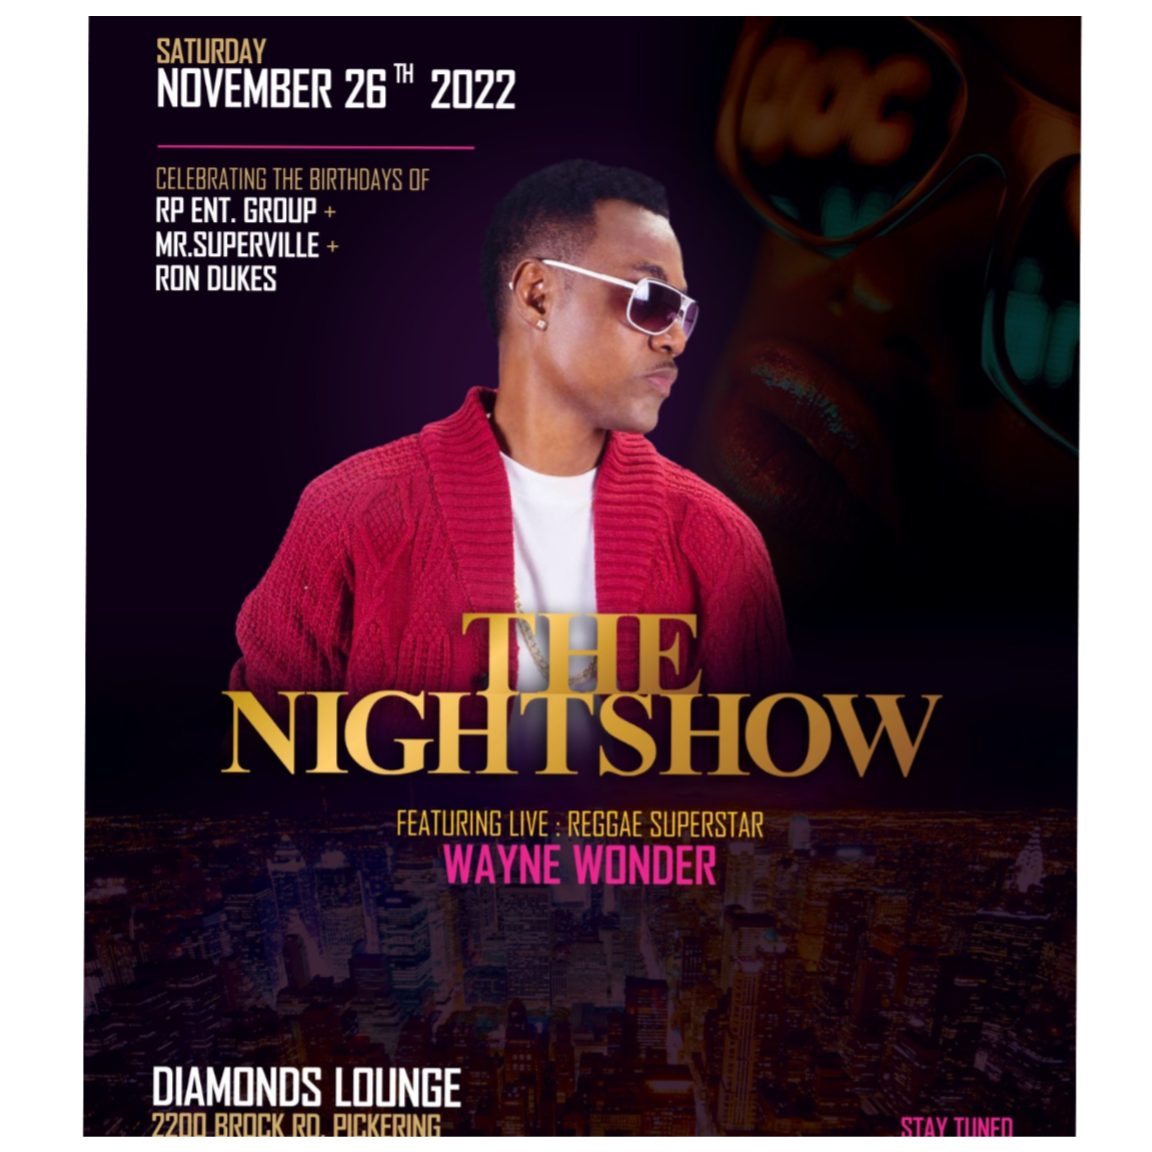 The night show feat Wayne Wonder